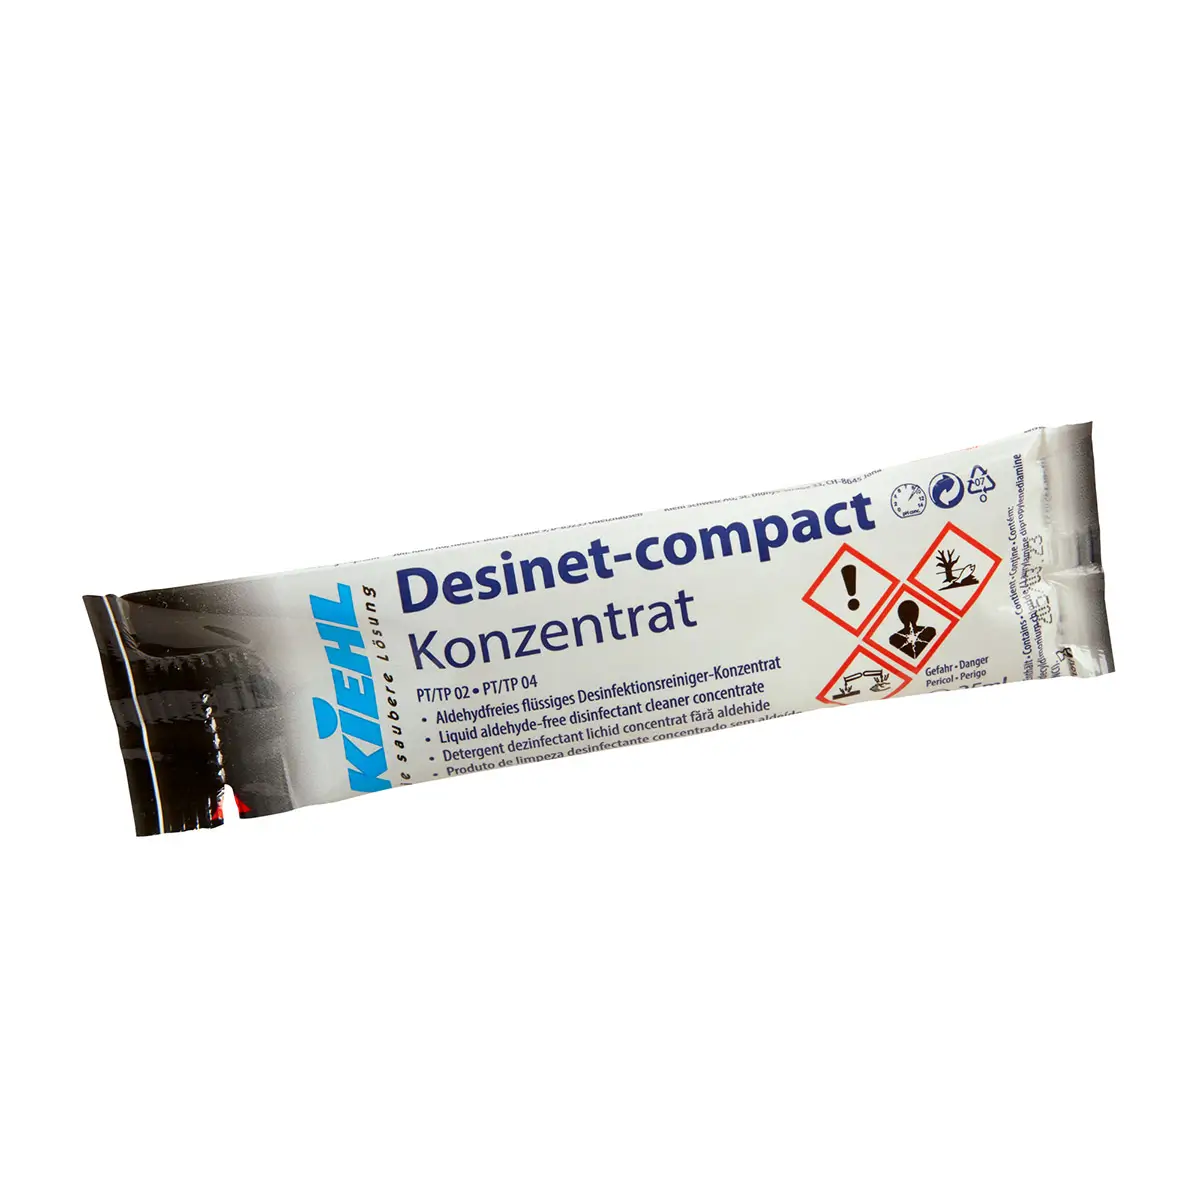 Kiehl Desinet Compact Desinfektionsreiniger